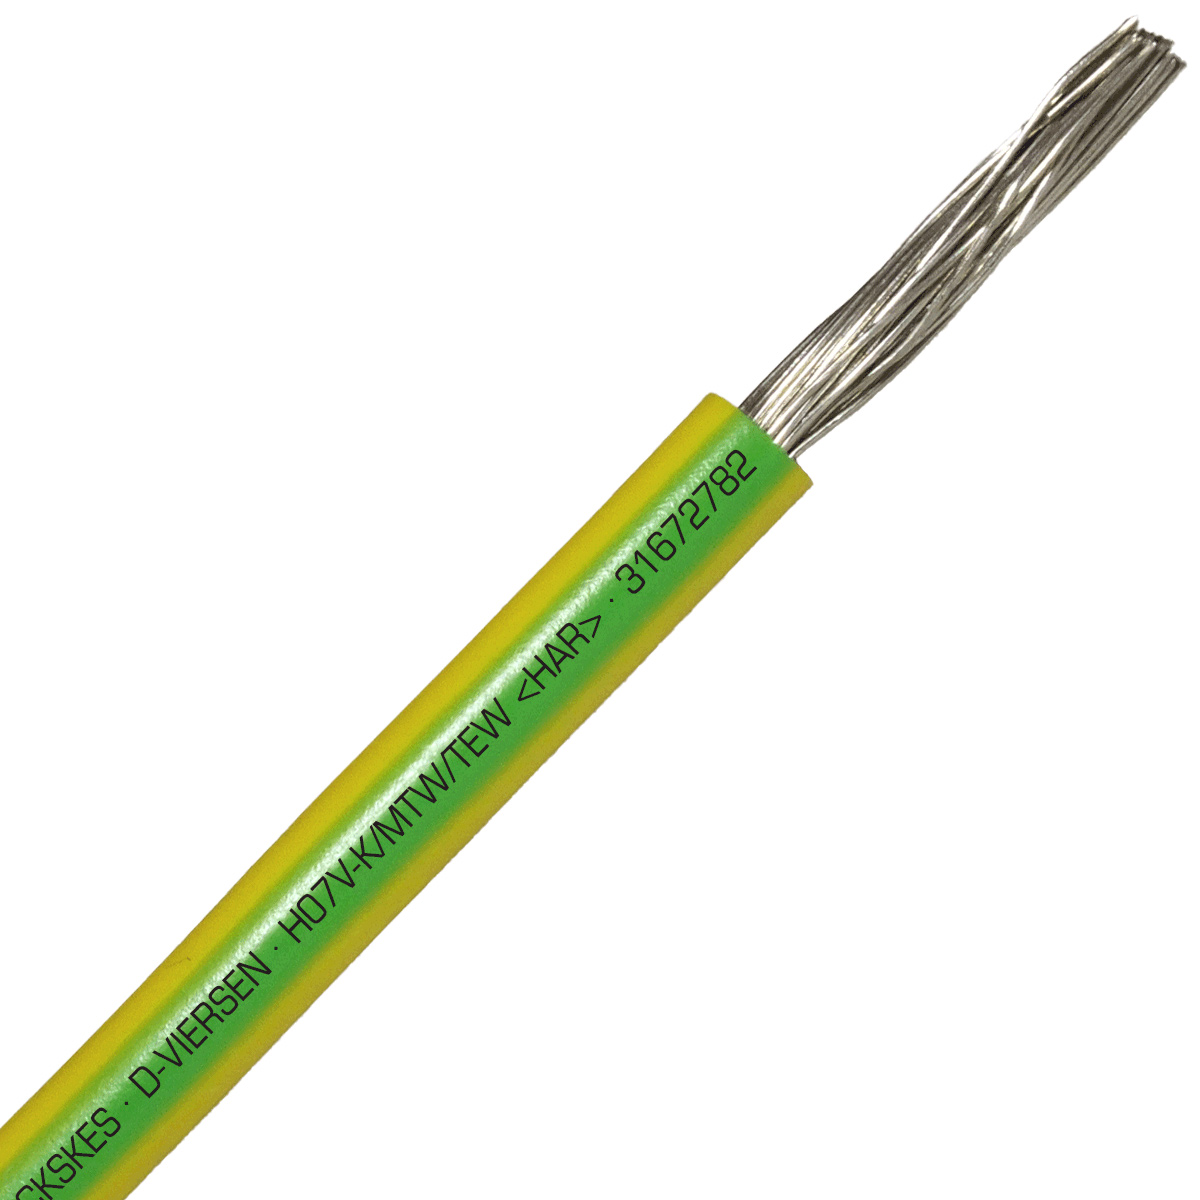 H07V2-K <lt/>HAR<gt/> International Lead Wire, 1.5MM2, 450/750V, PVC Insulated, Green/Yellow